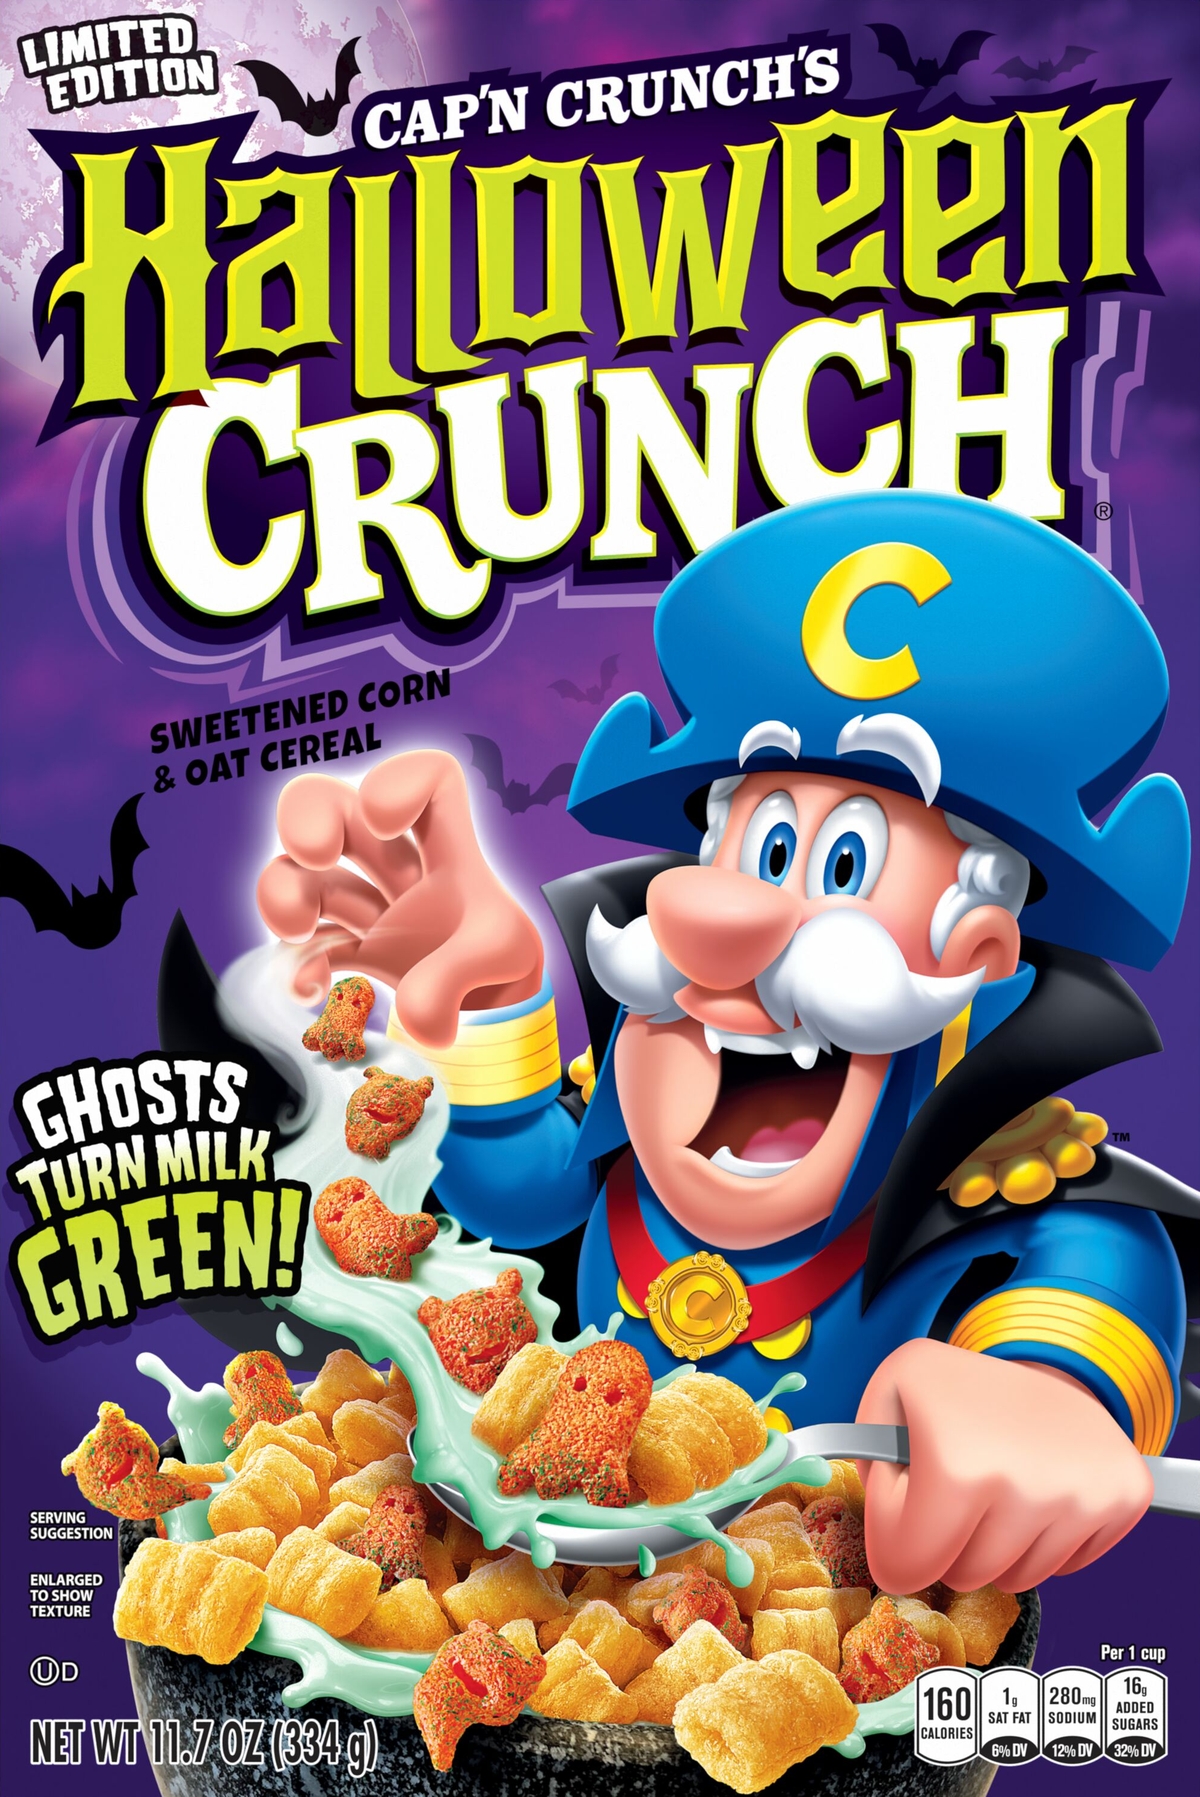 Cap'n Crunch's Halloween Crunch